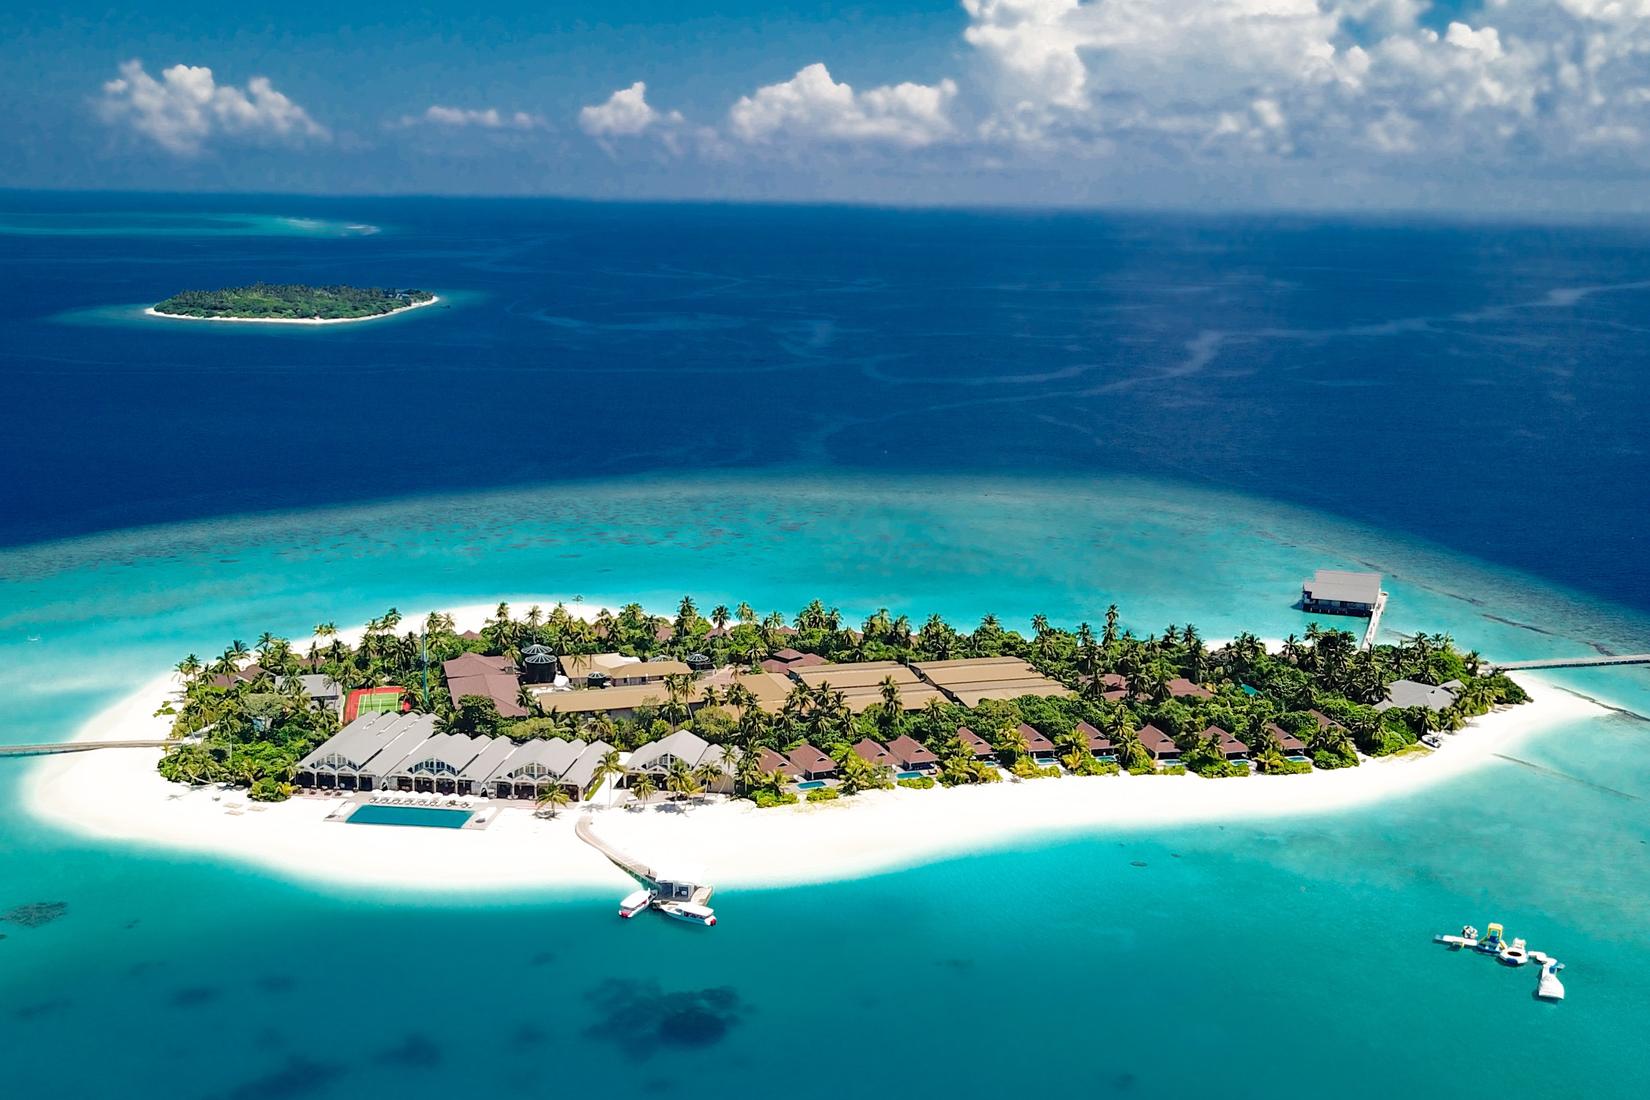 Sandee - The Standard, Huruvalhi Maldives